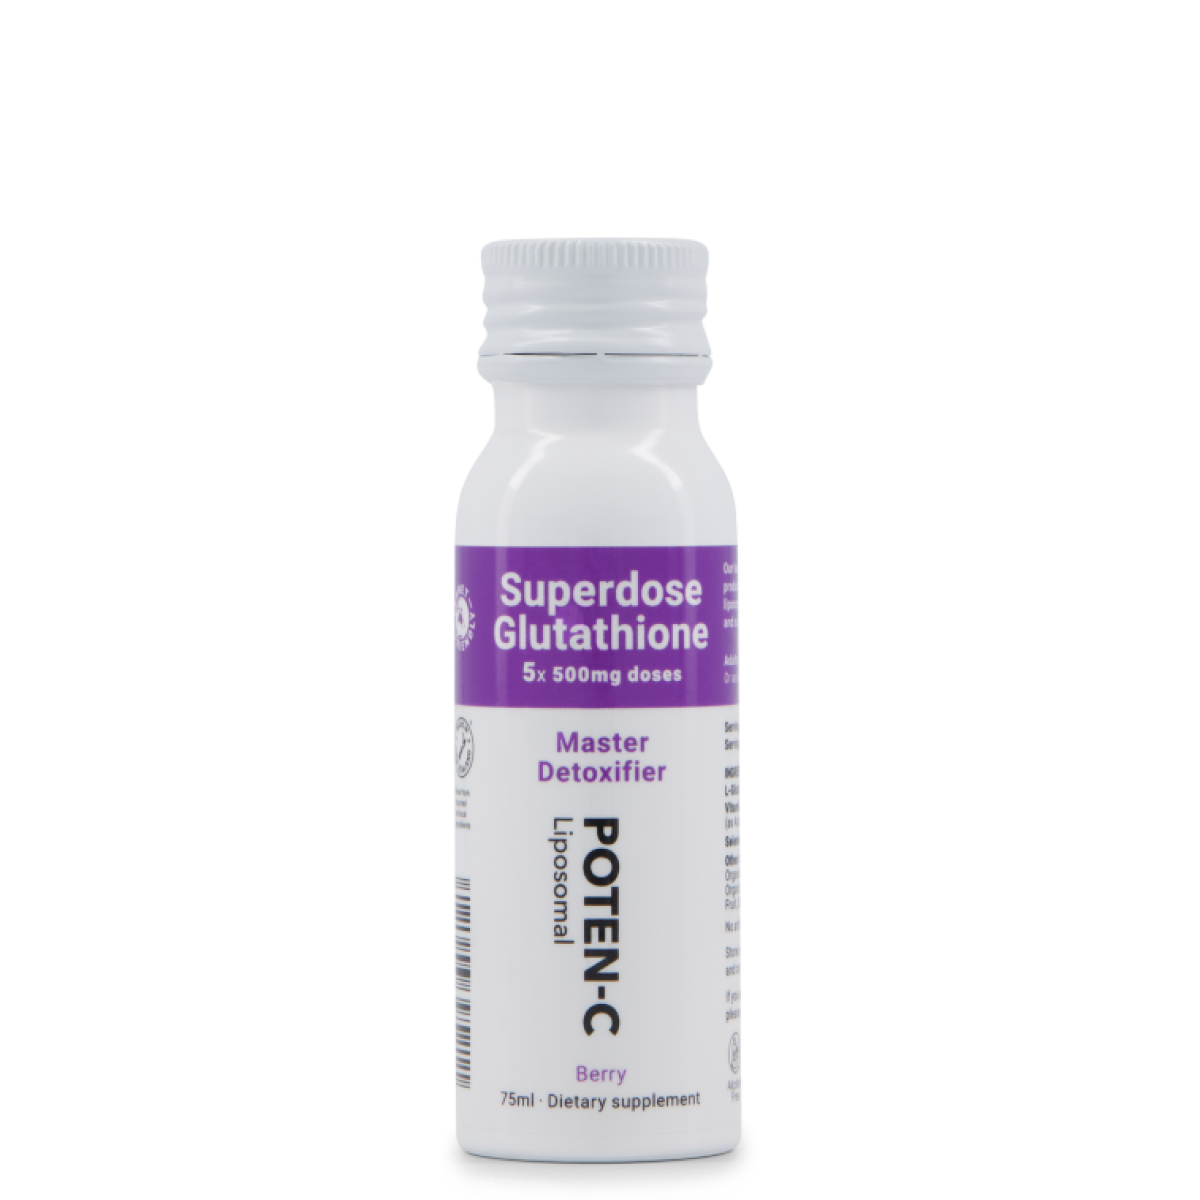 Superdose Liposomal Glutathione - 5x 500mg Doses